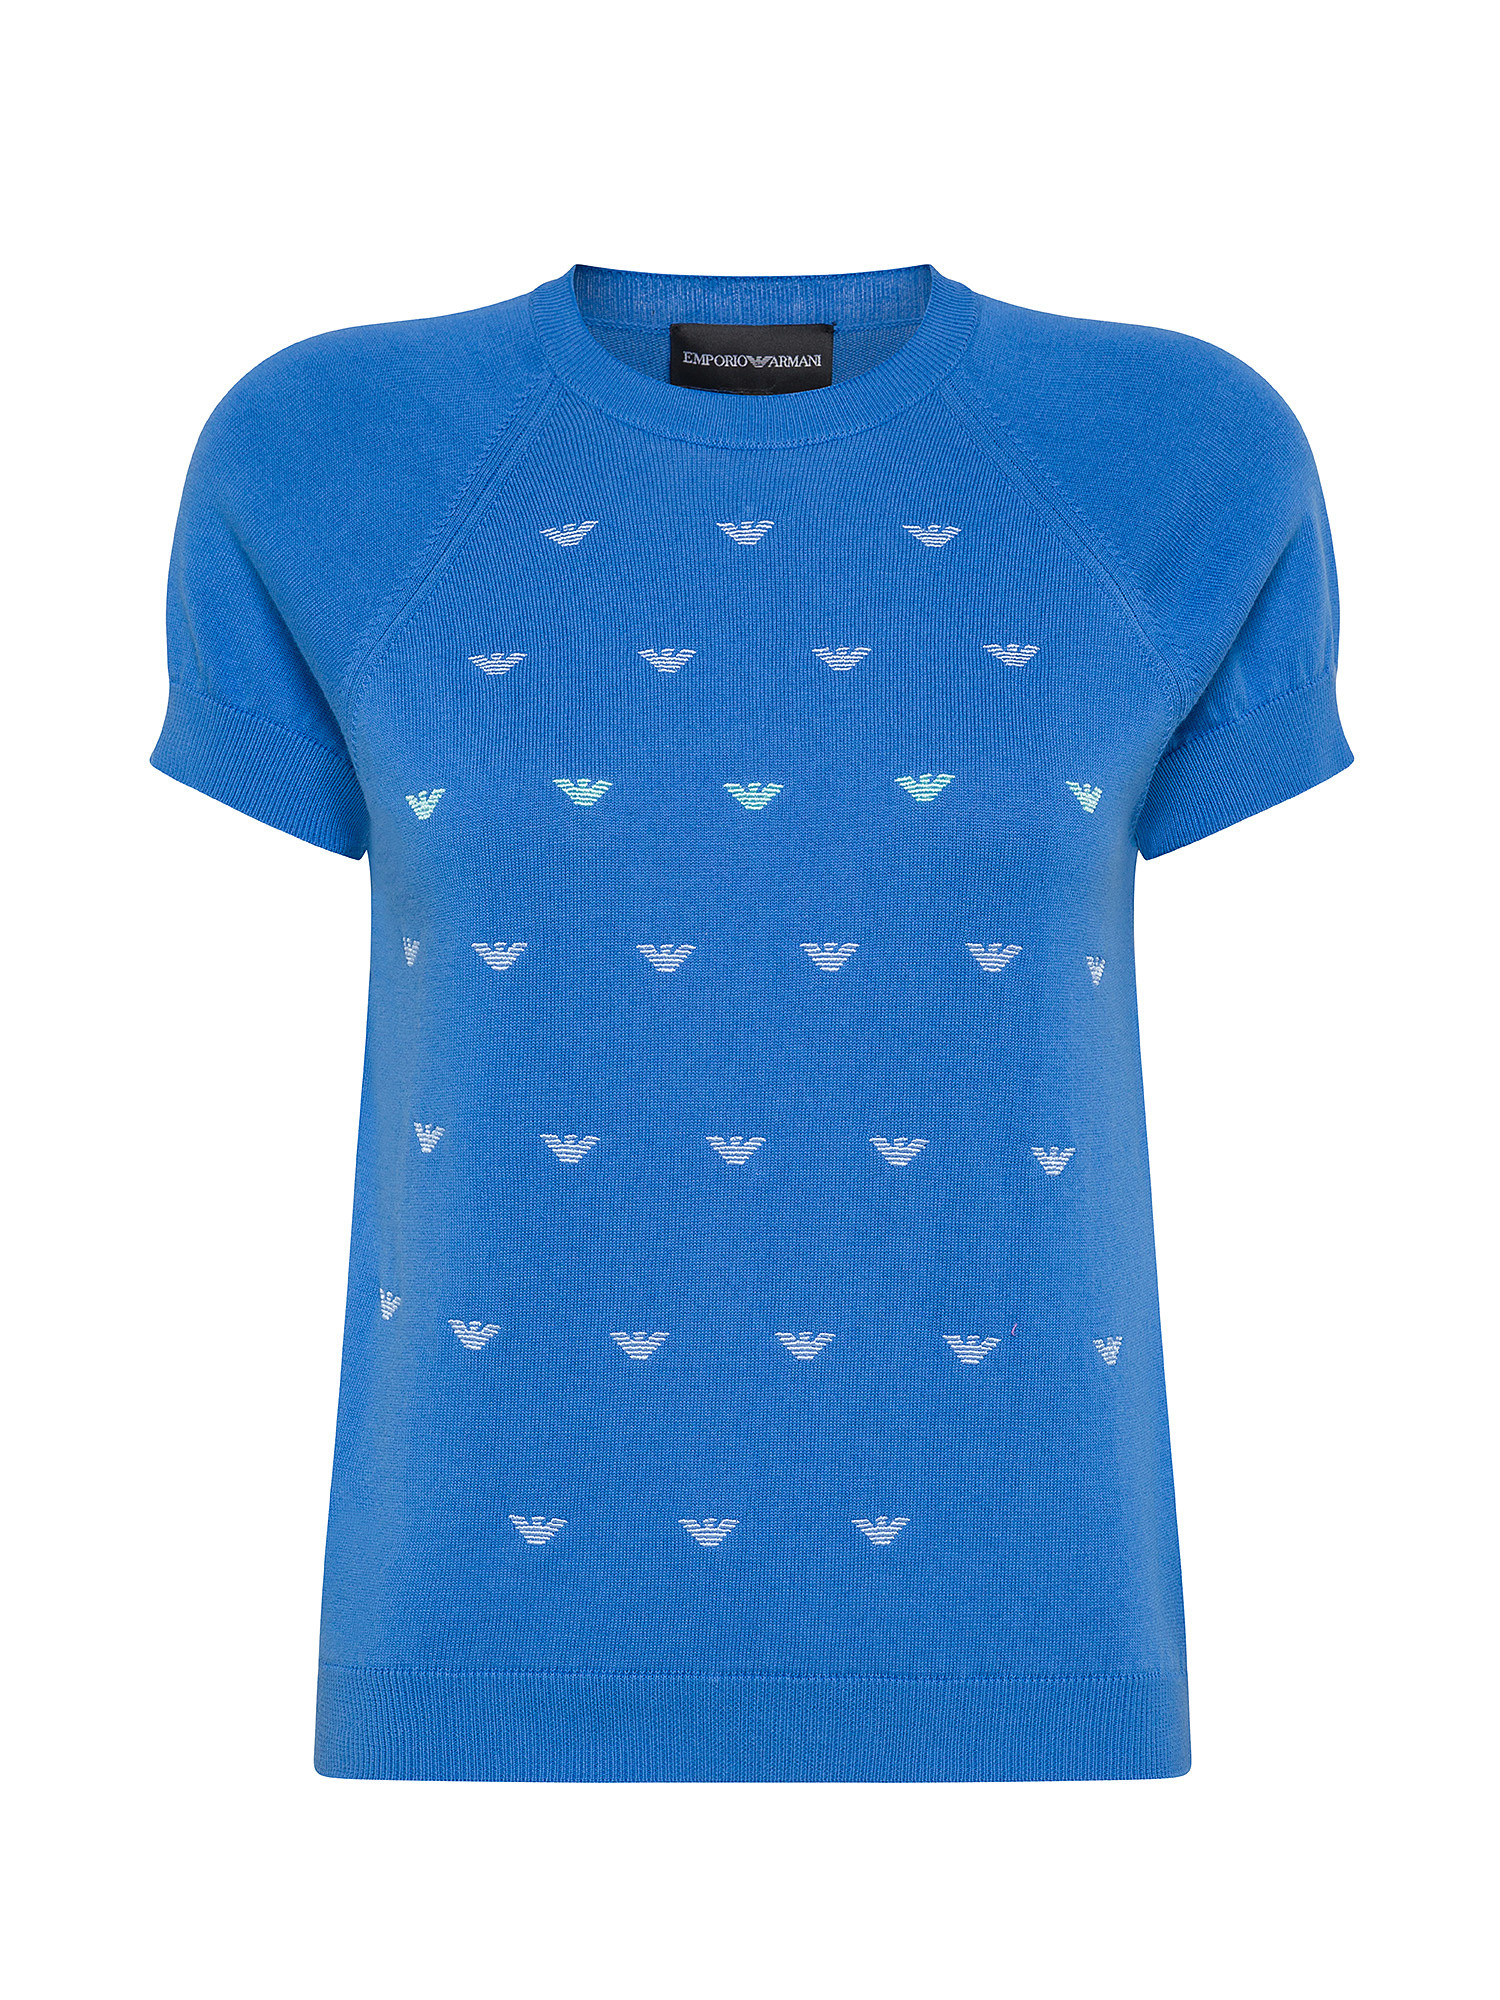 Emporio Armani - Cotton sweater with eagle logo, Blue Dark, large image number 0